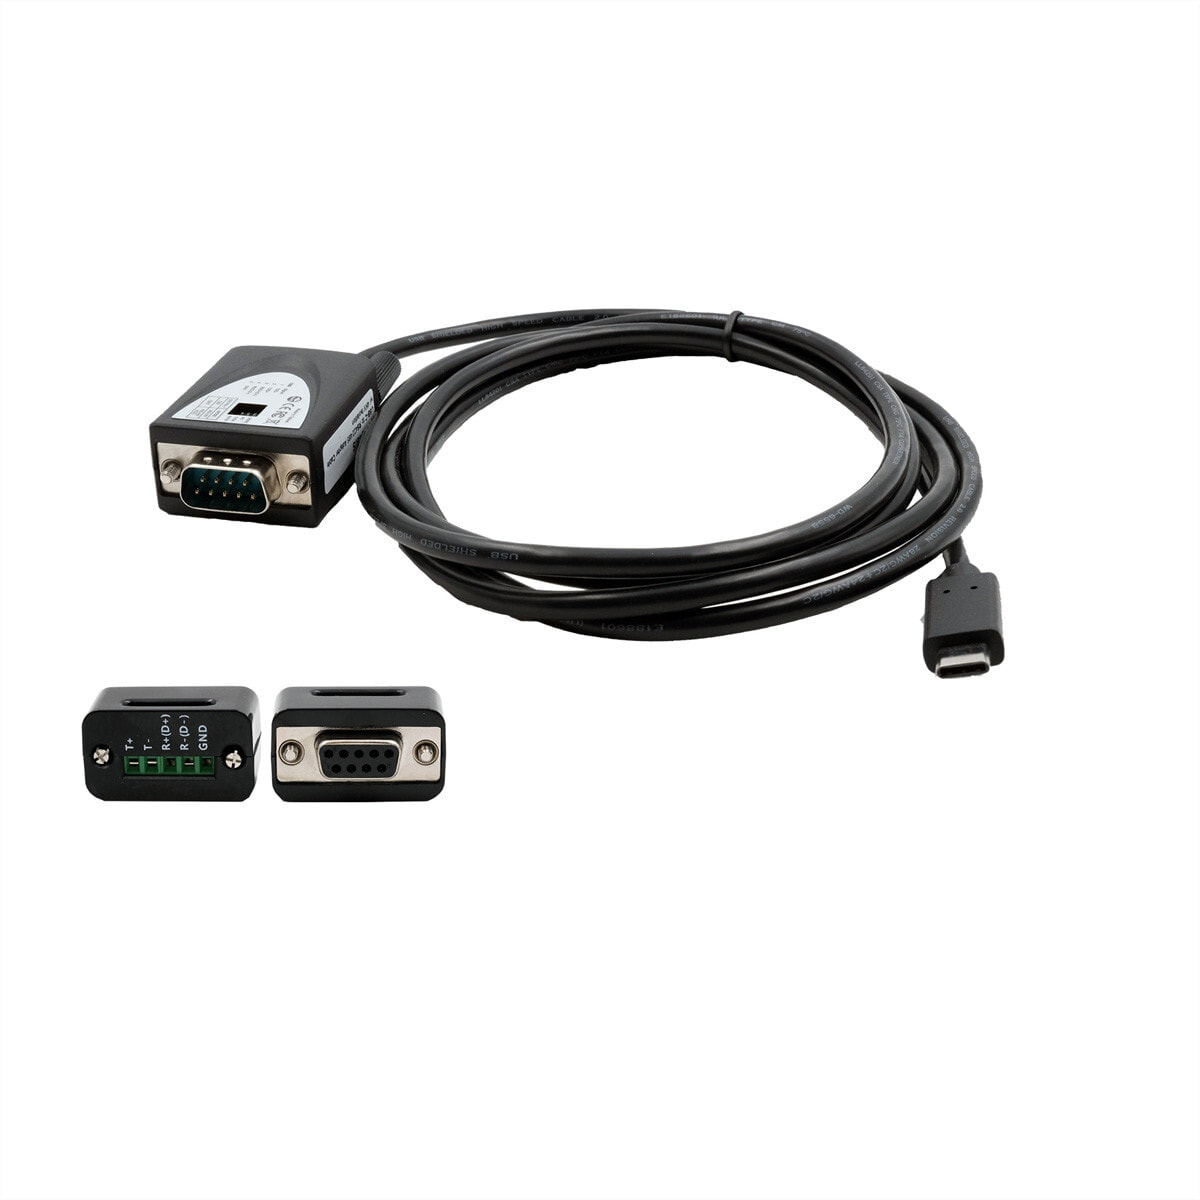 Компьютерный разъем или переходник Exsys GmbH USB 2.0 C-Stecker zu Seriell RS-422/485 Kabel FTDI Chip - Cable